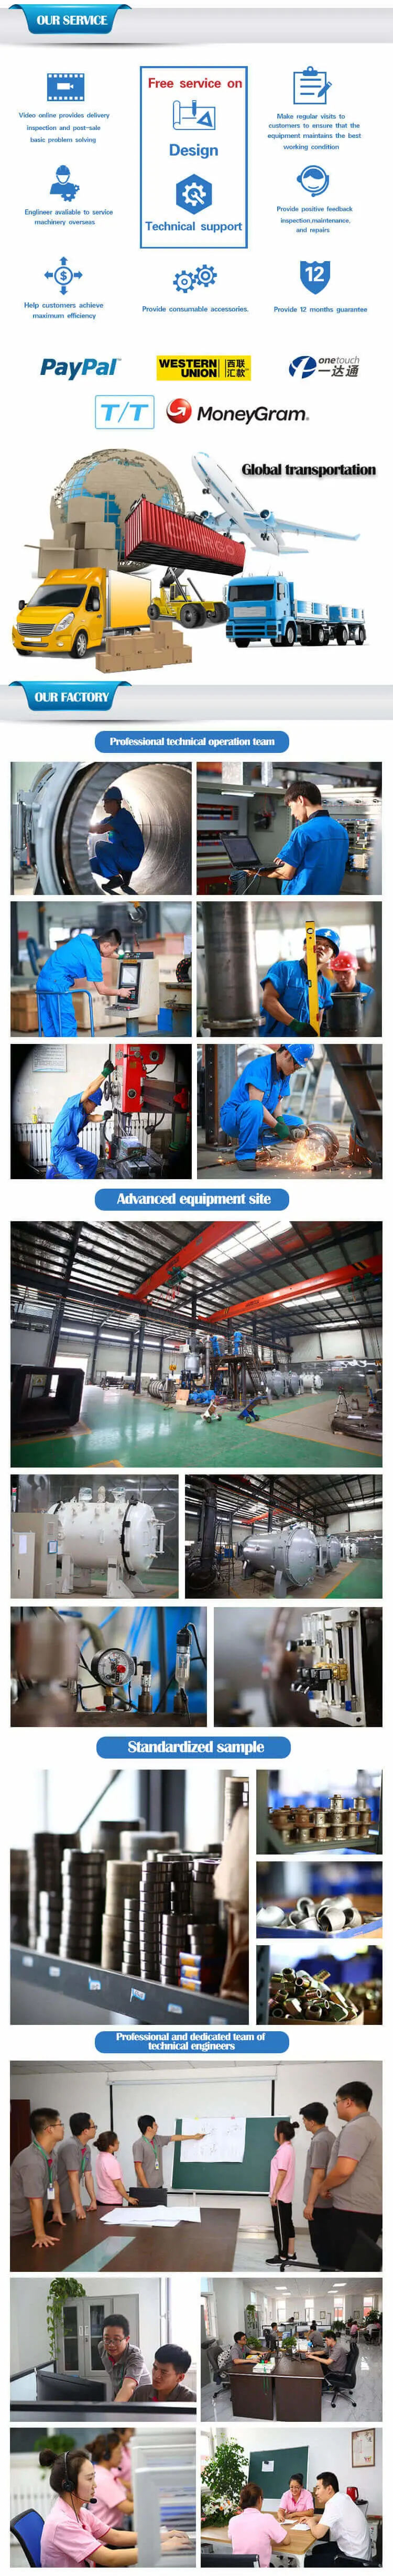 Liaoning Shenyang Densen Customized Diamond Vacuum Brazing Furnace Vhbd557, Vacuum Heat Treatment Diamond Furnace, Diamond Segment Brazing Machine